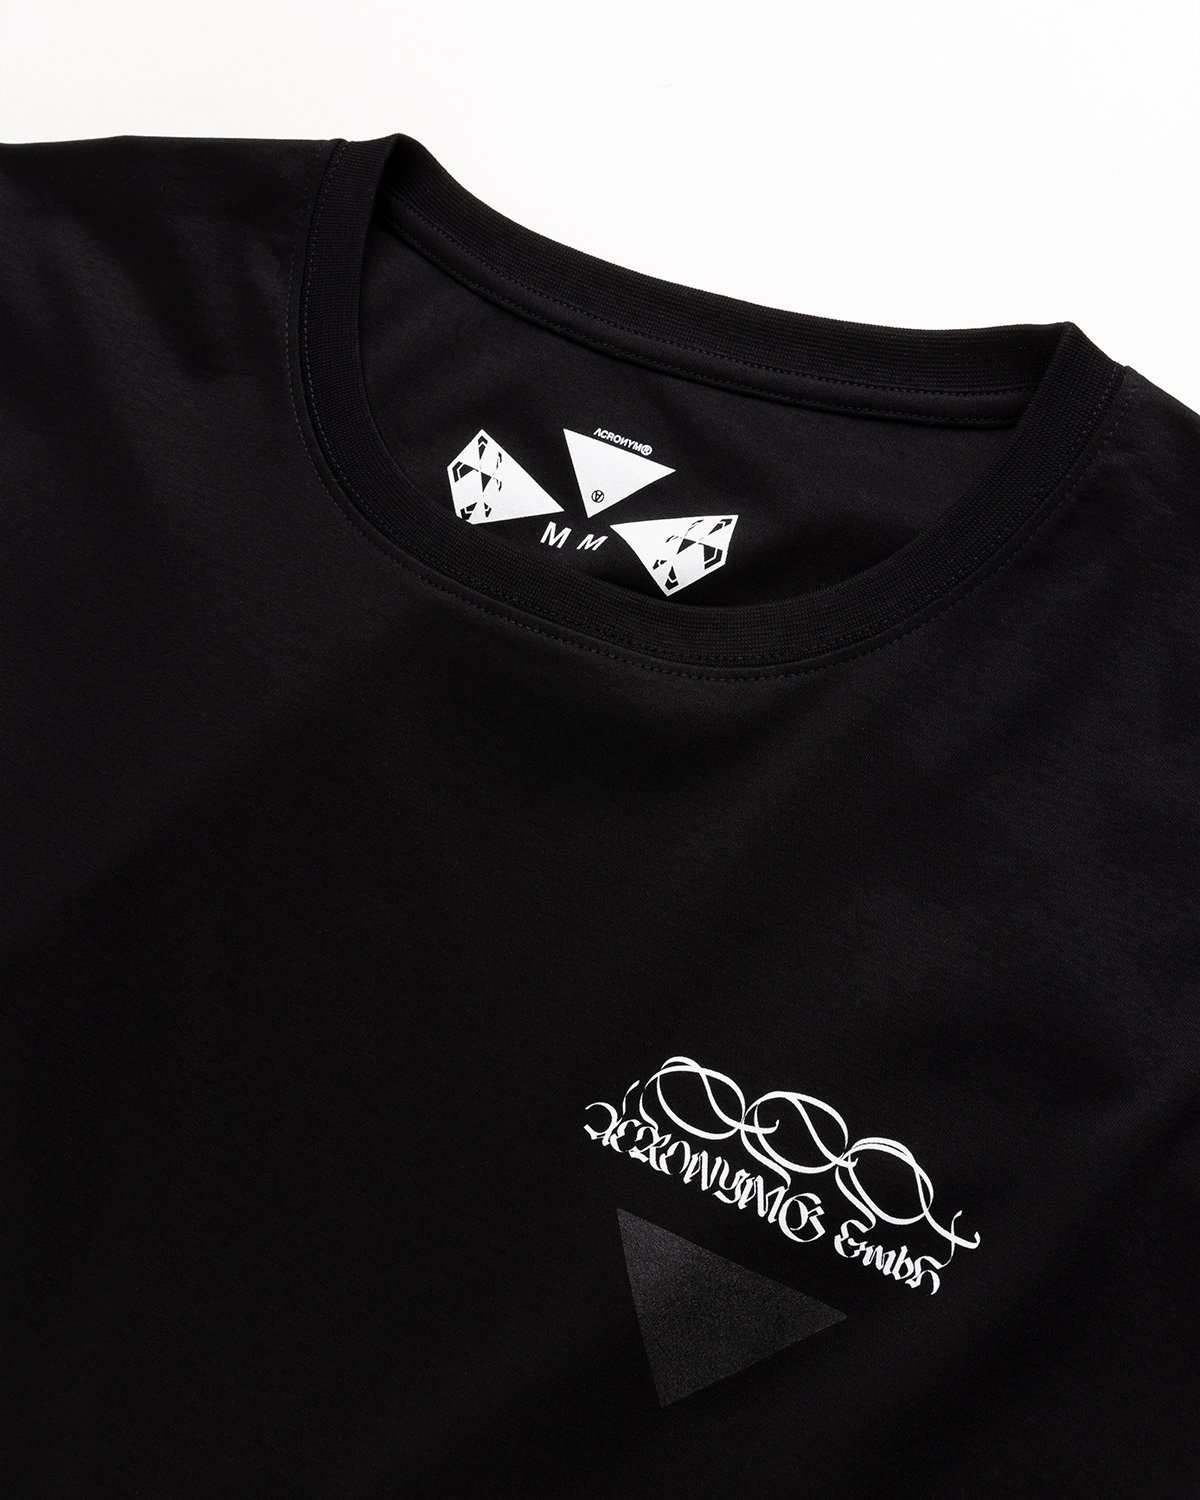 ACRONYM – S25-PR-A Sleeveless T-Shirt Black - Men Tops - Black - Image 4